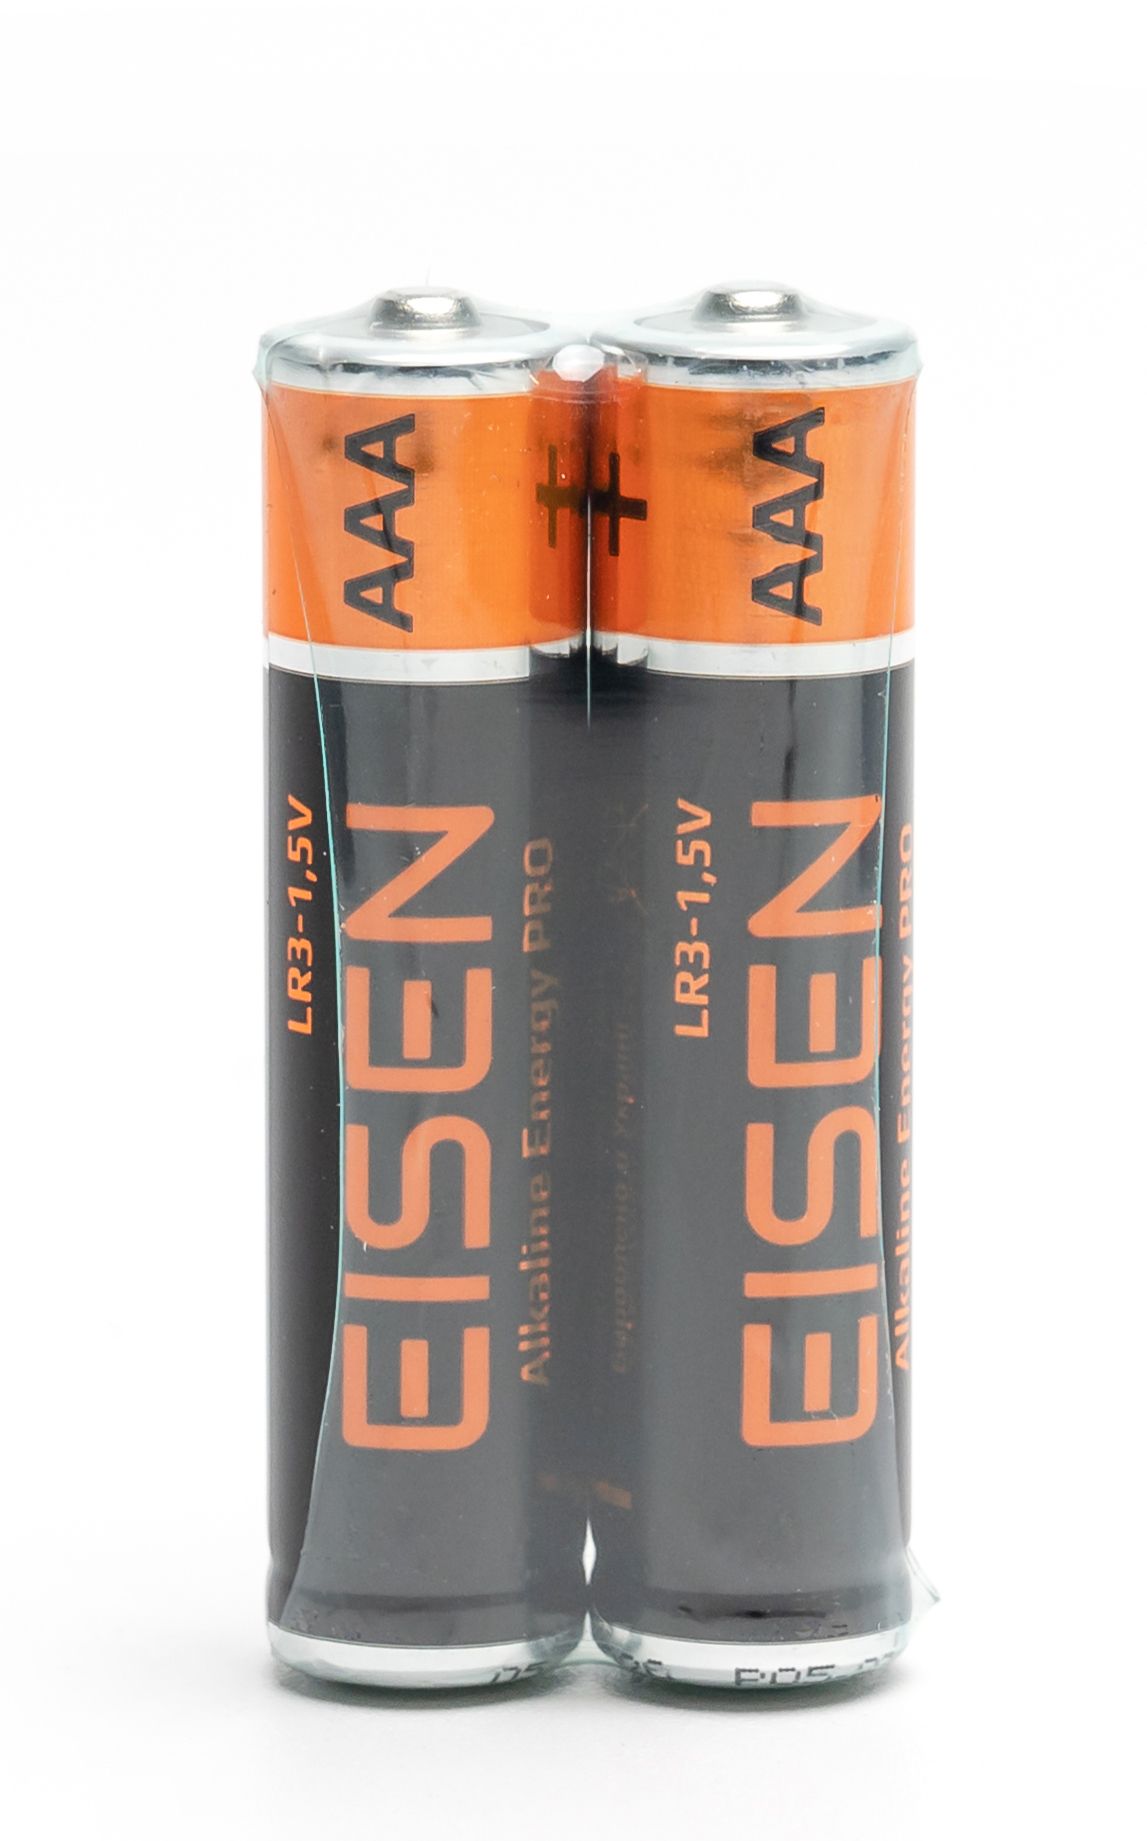 Батарейка Eisen Energy Alkaline PRO LR03 (AAA) спайка 2шт.